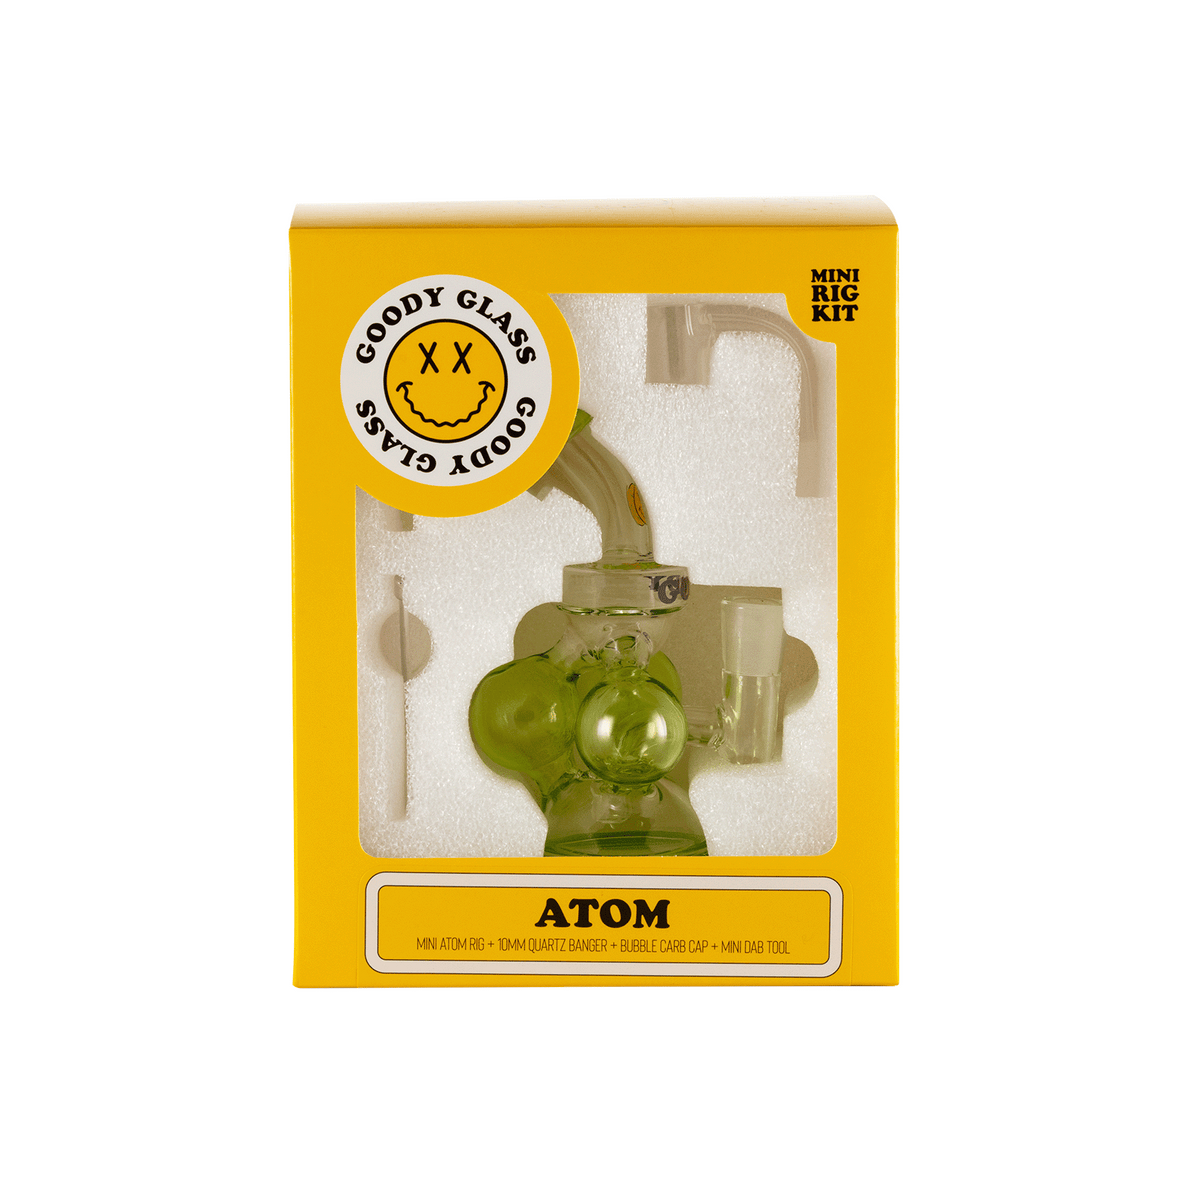 “Atom” Mini Dab Rig - Full Kit